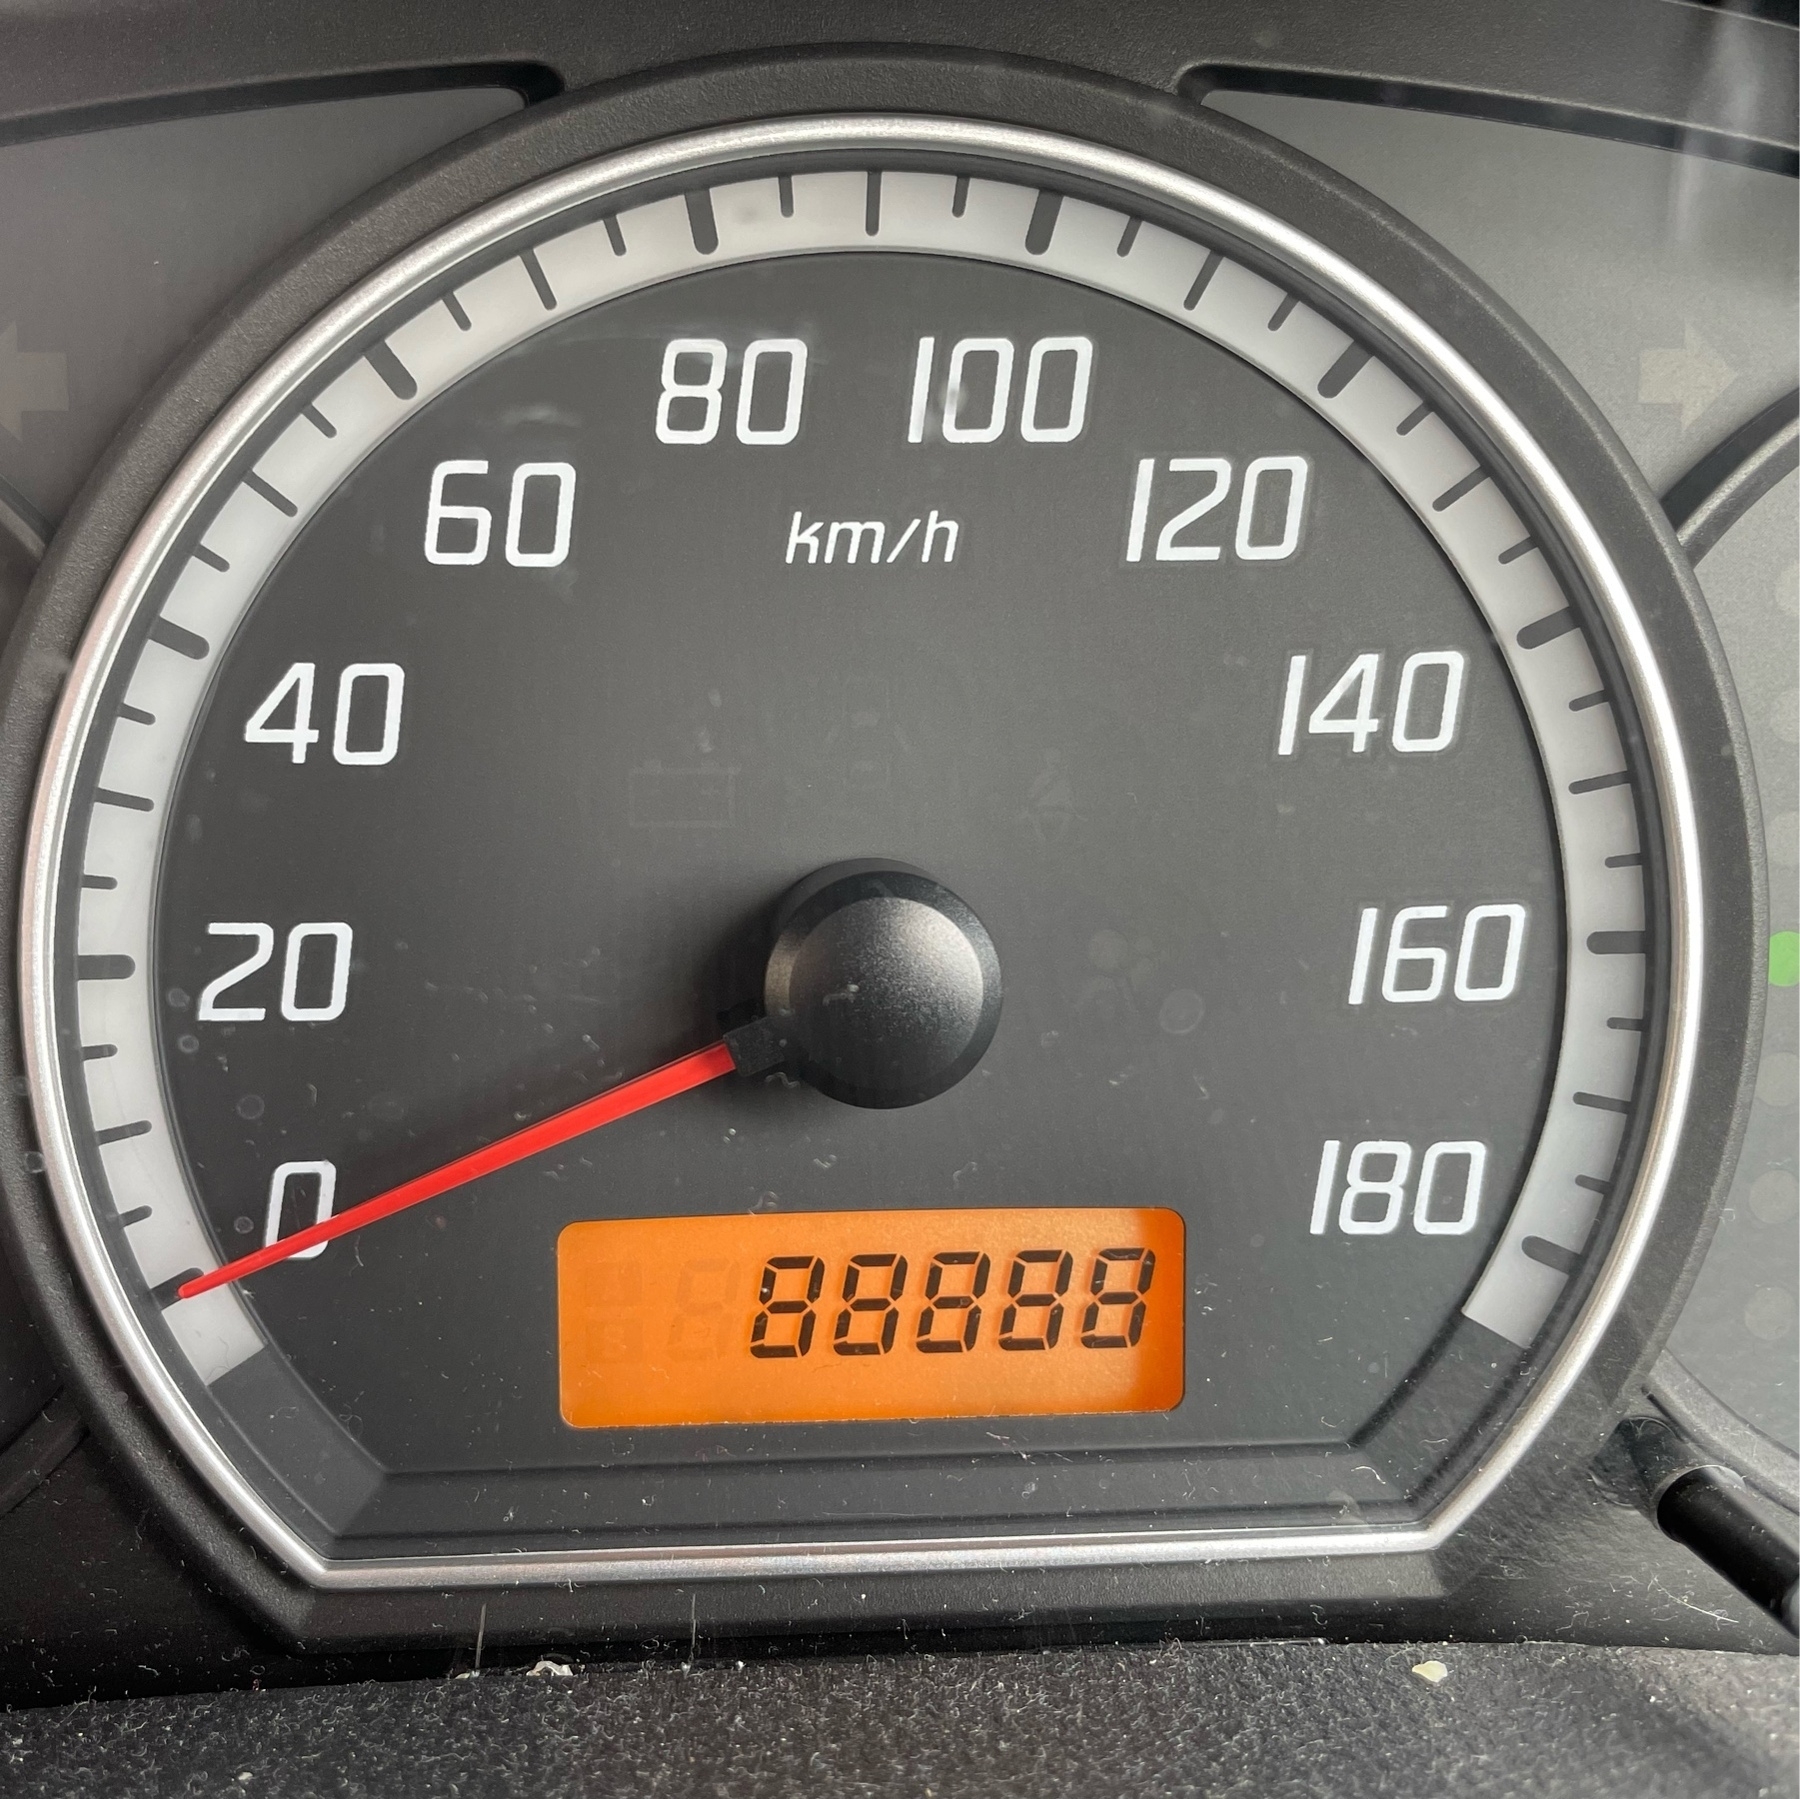 My odometer, reading 88888 km. 